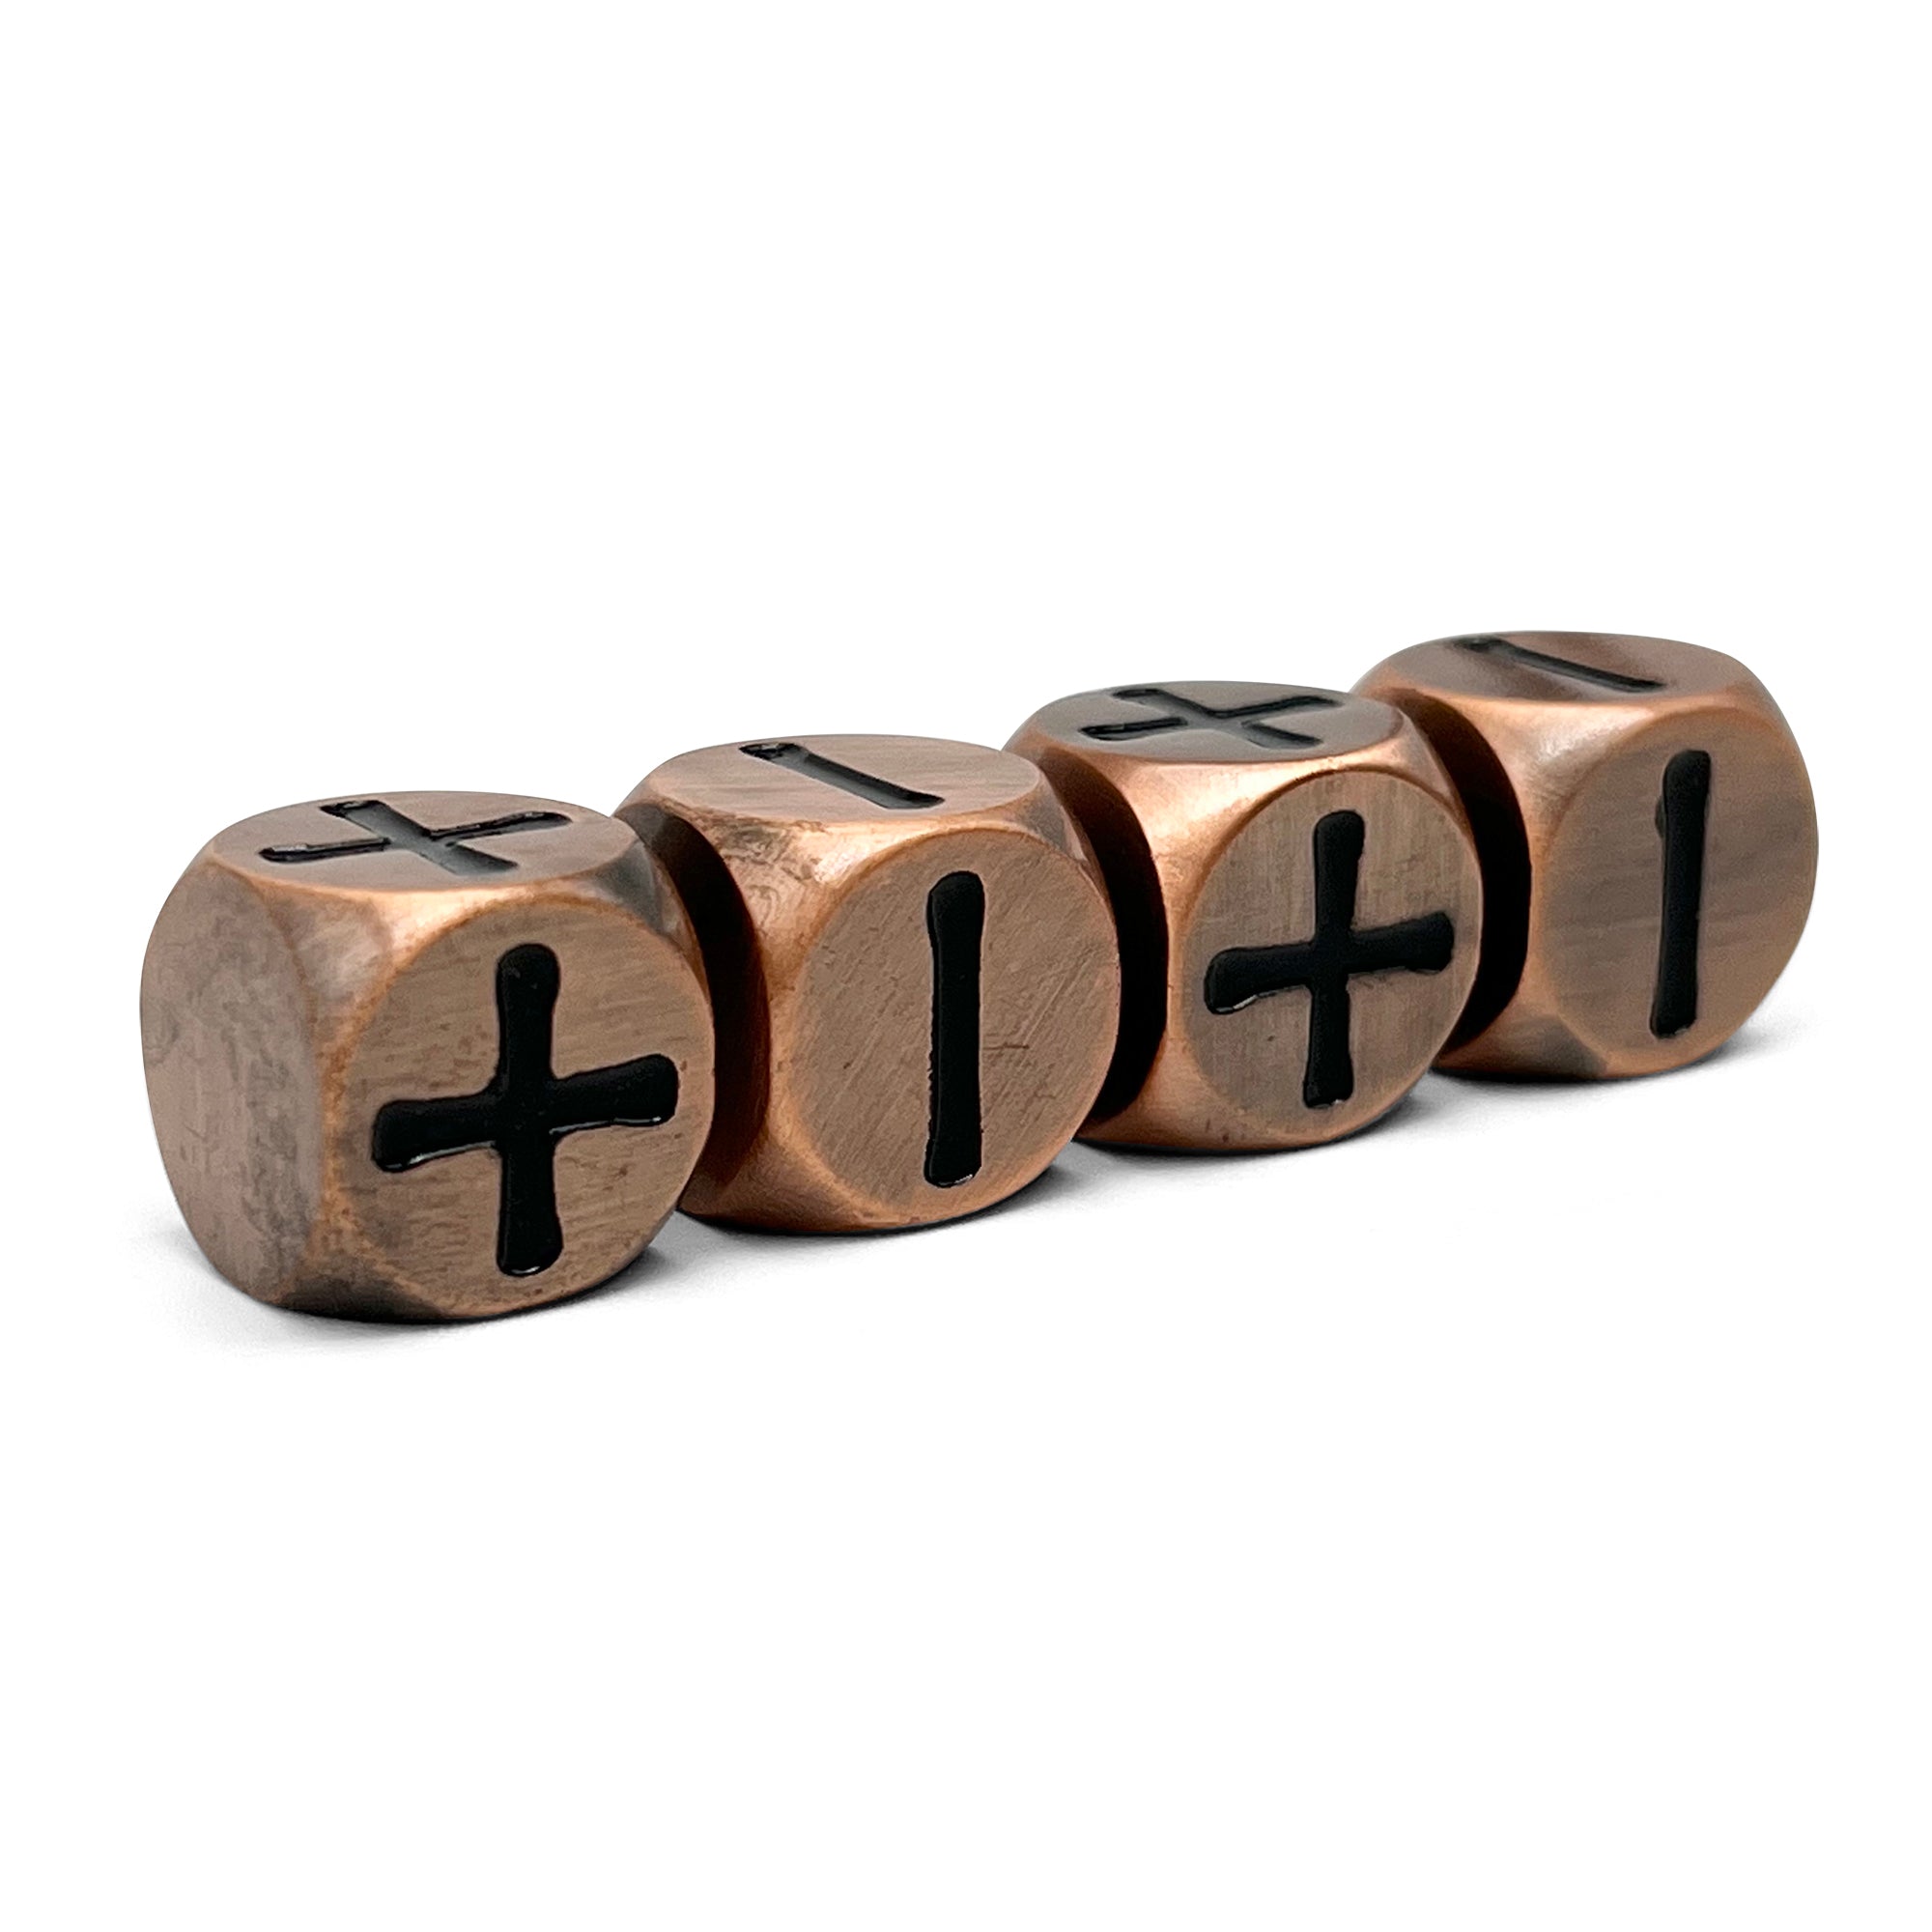 Fate Dice – Gnomish Copper Pack of 4 Metal Dice